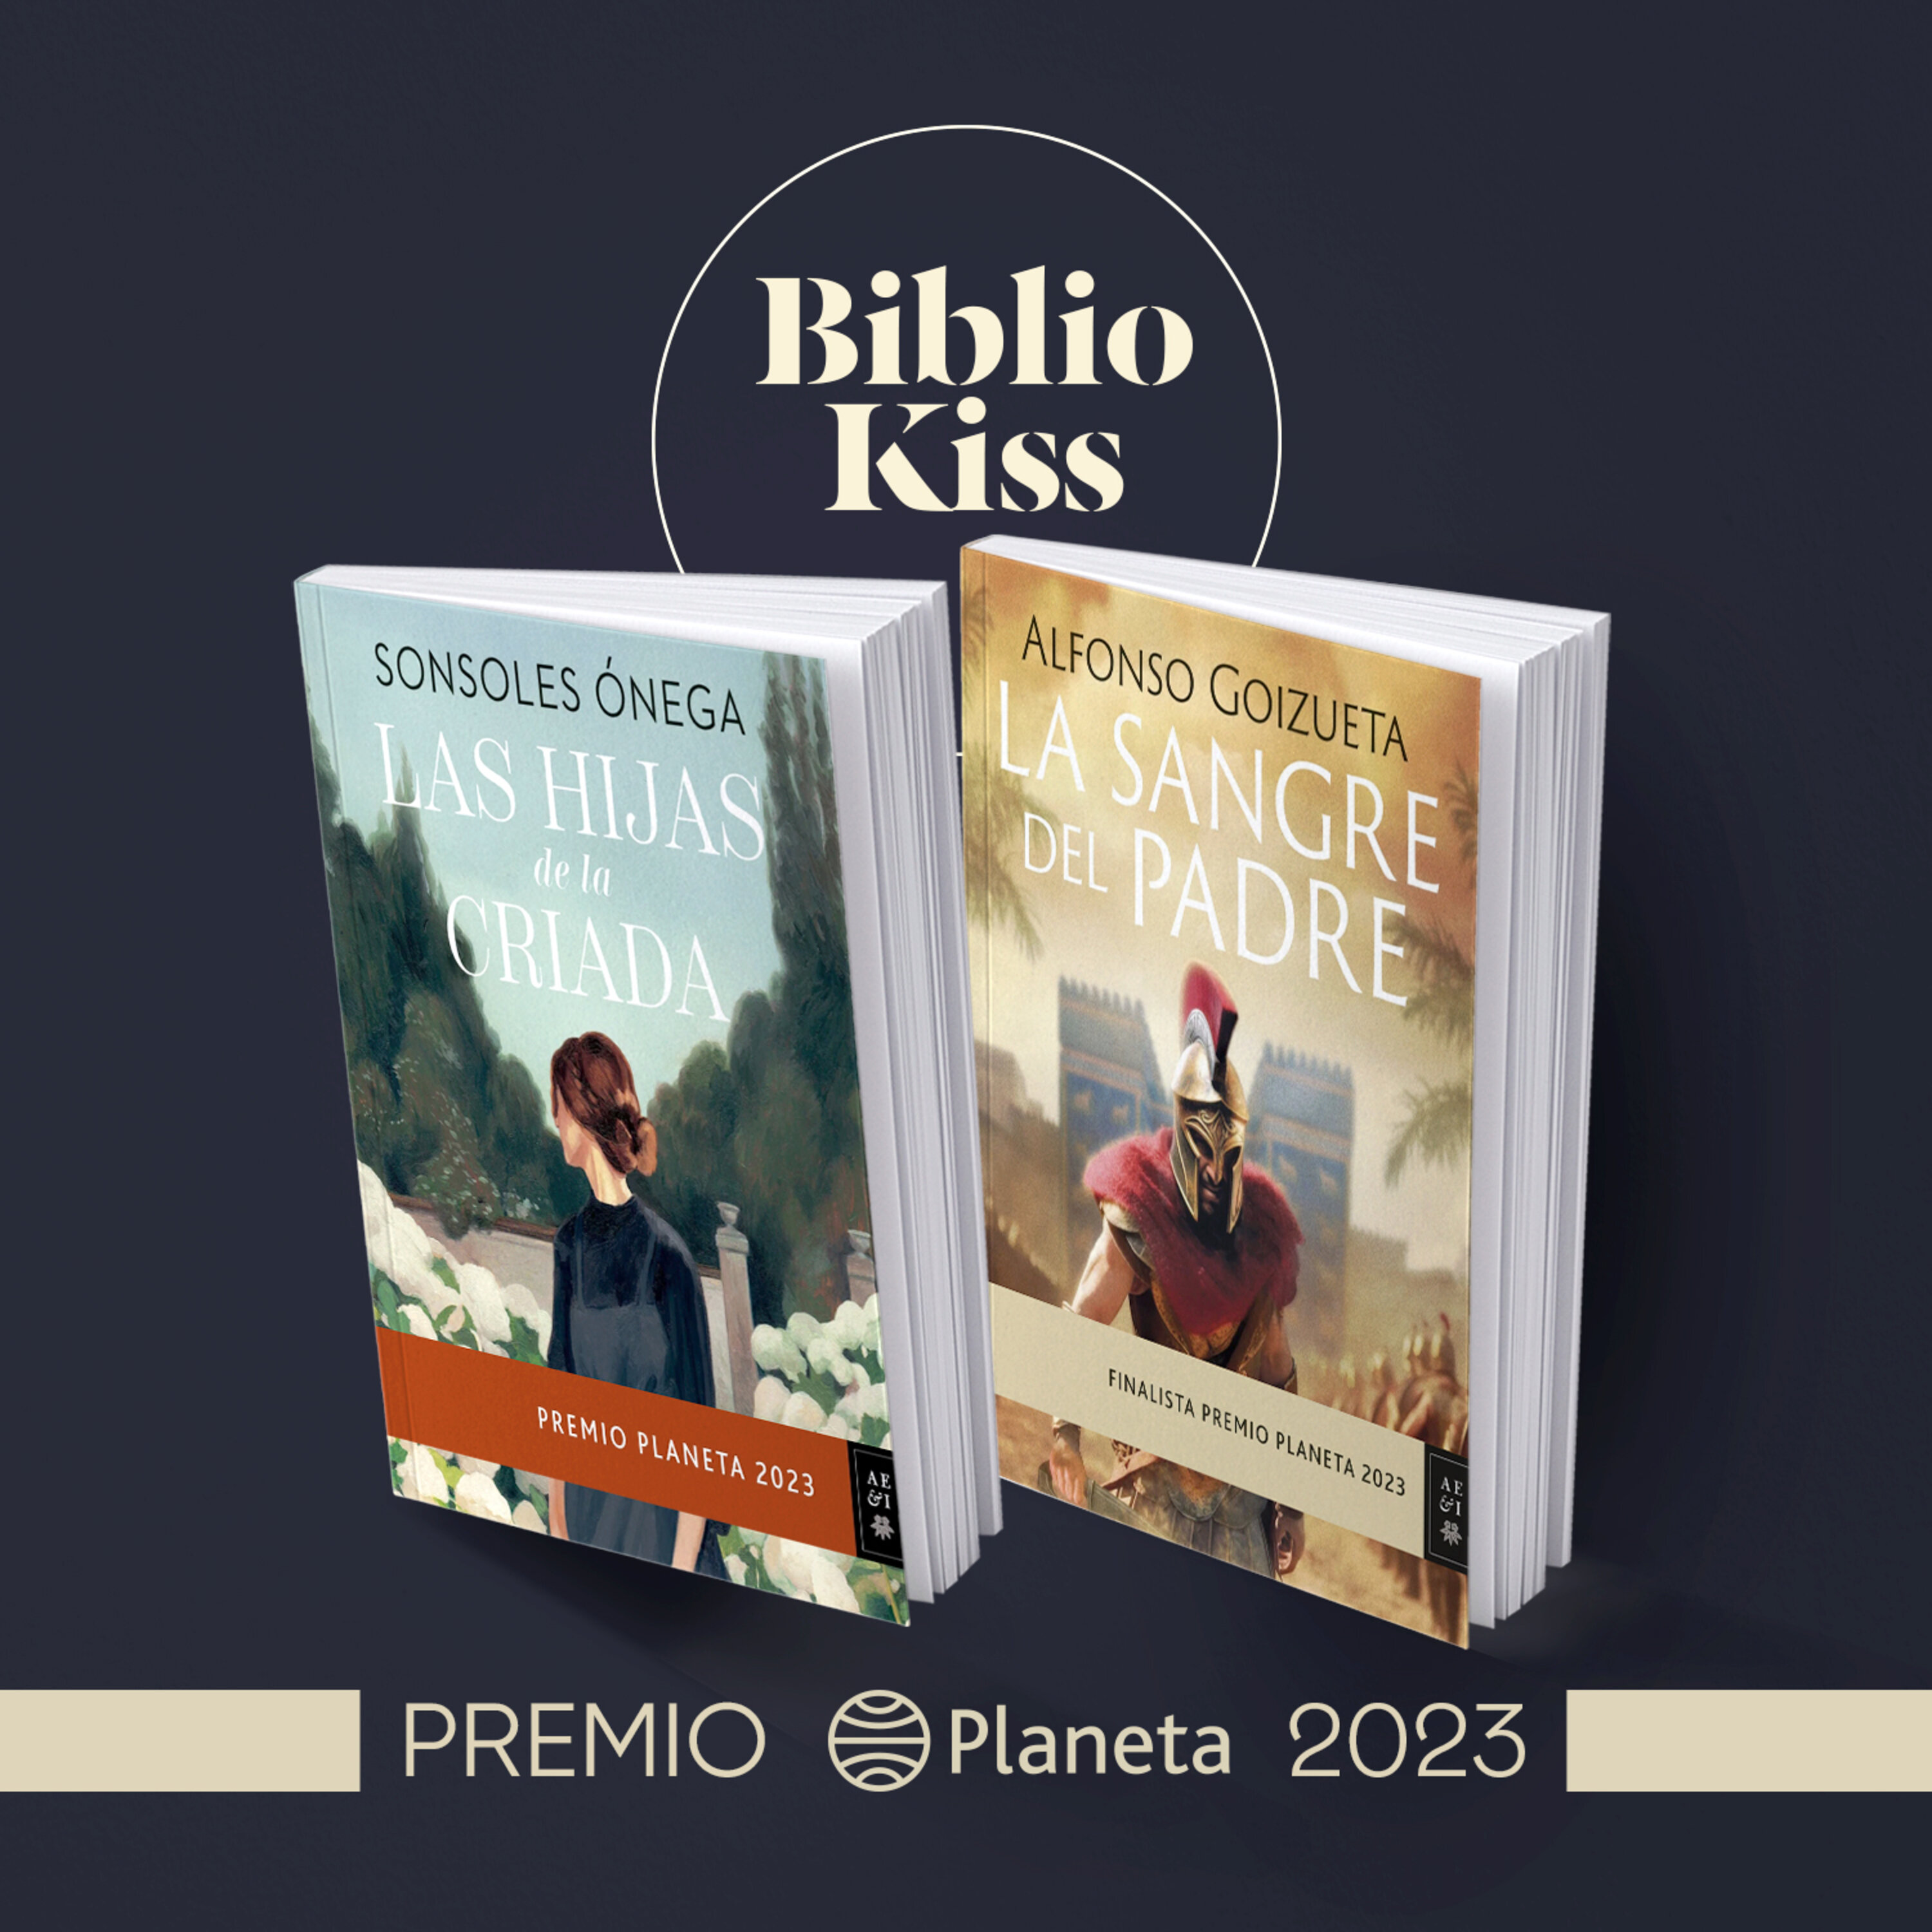 Sónsoles Ónega y Alfonso Goizueta nos presentan las novelas Premio Planeta 2023